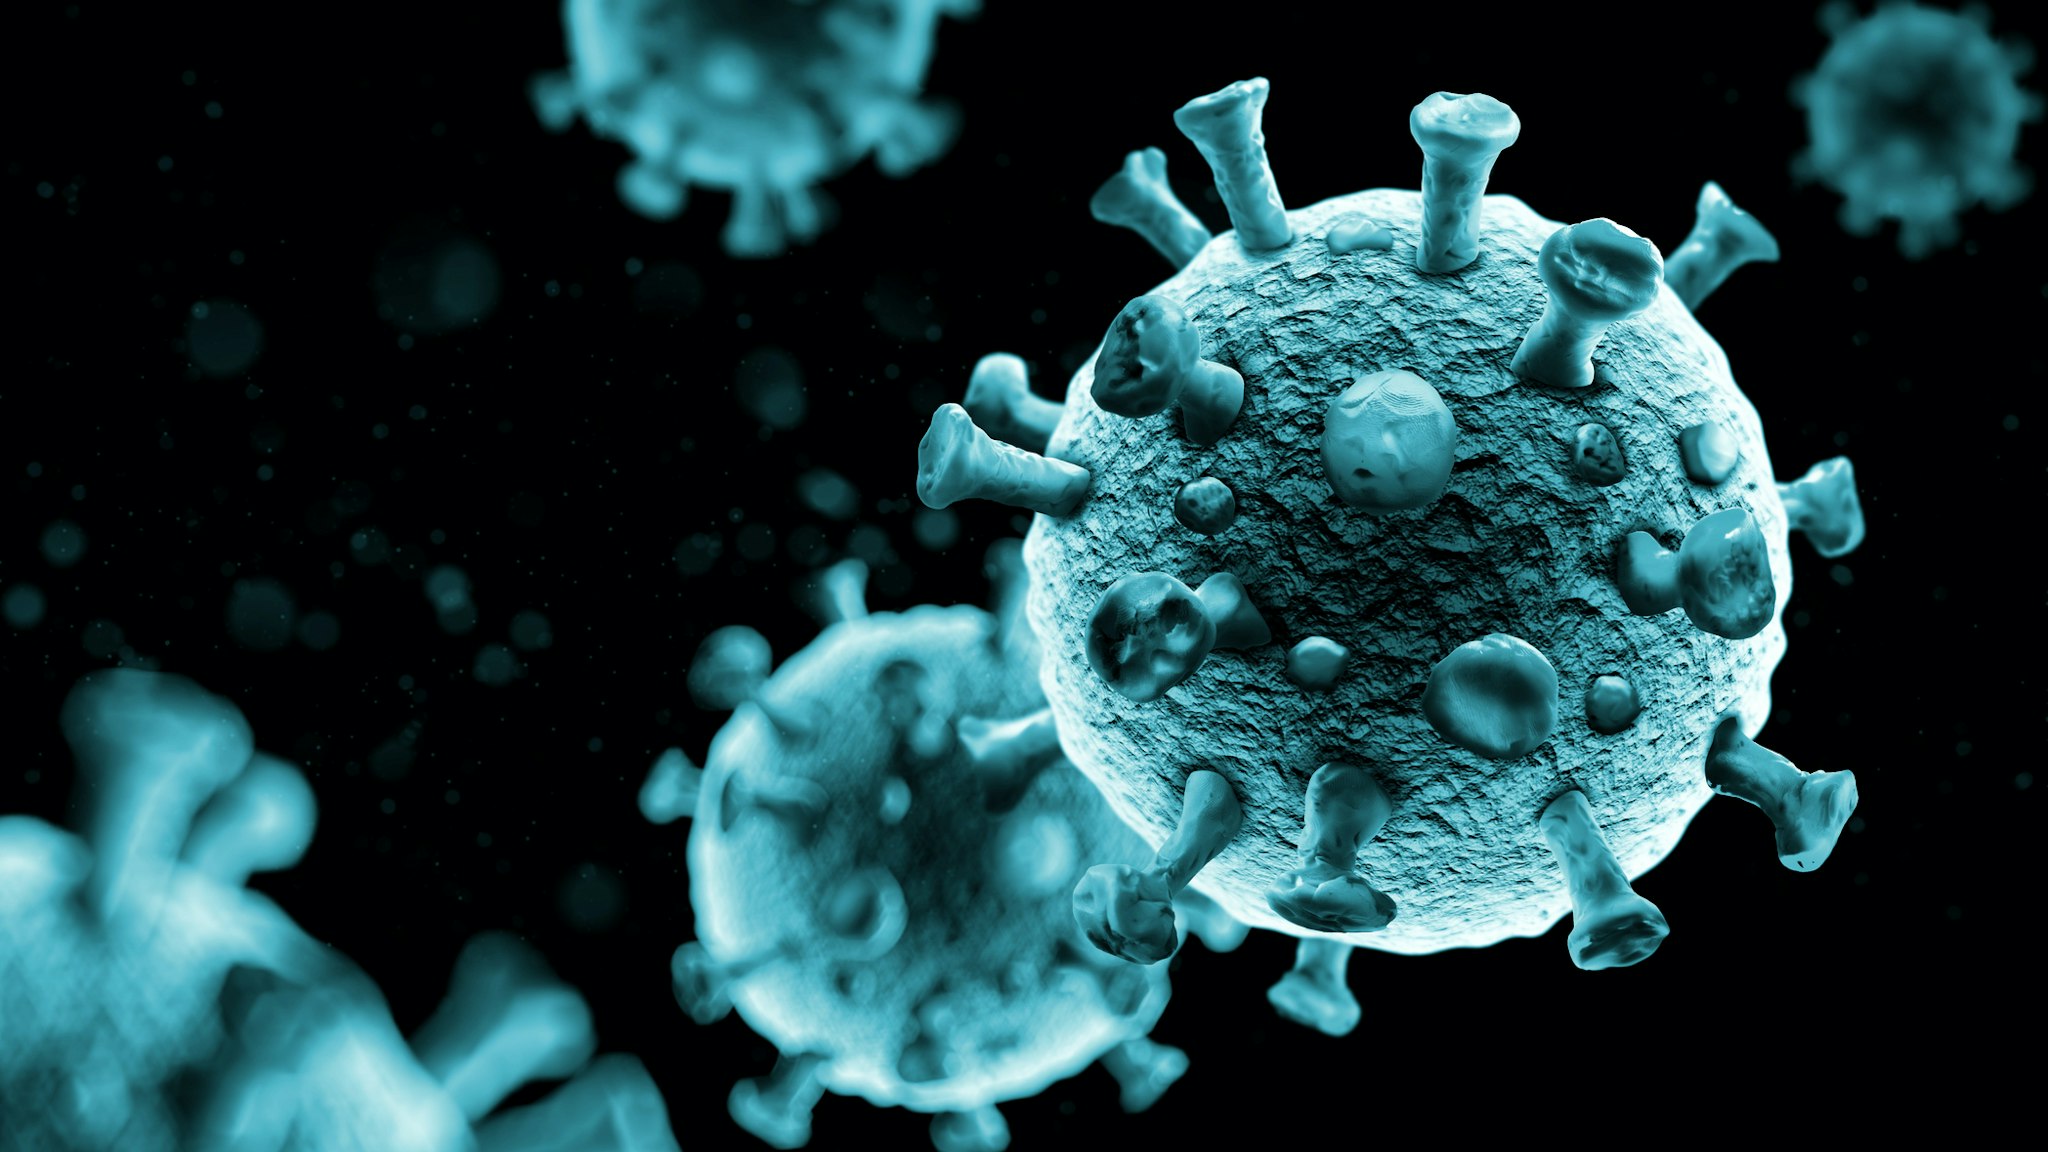 Virus - 3D Rendered Image on Dark Background. Viral Infection Concept.